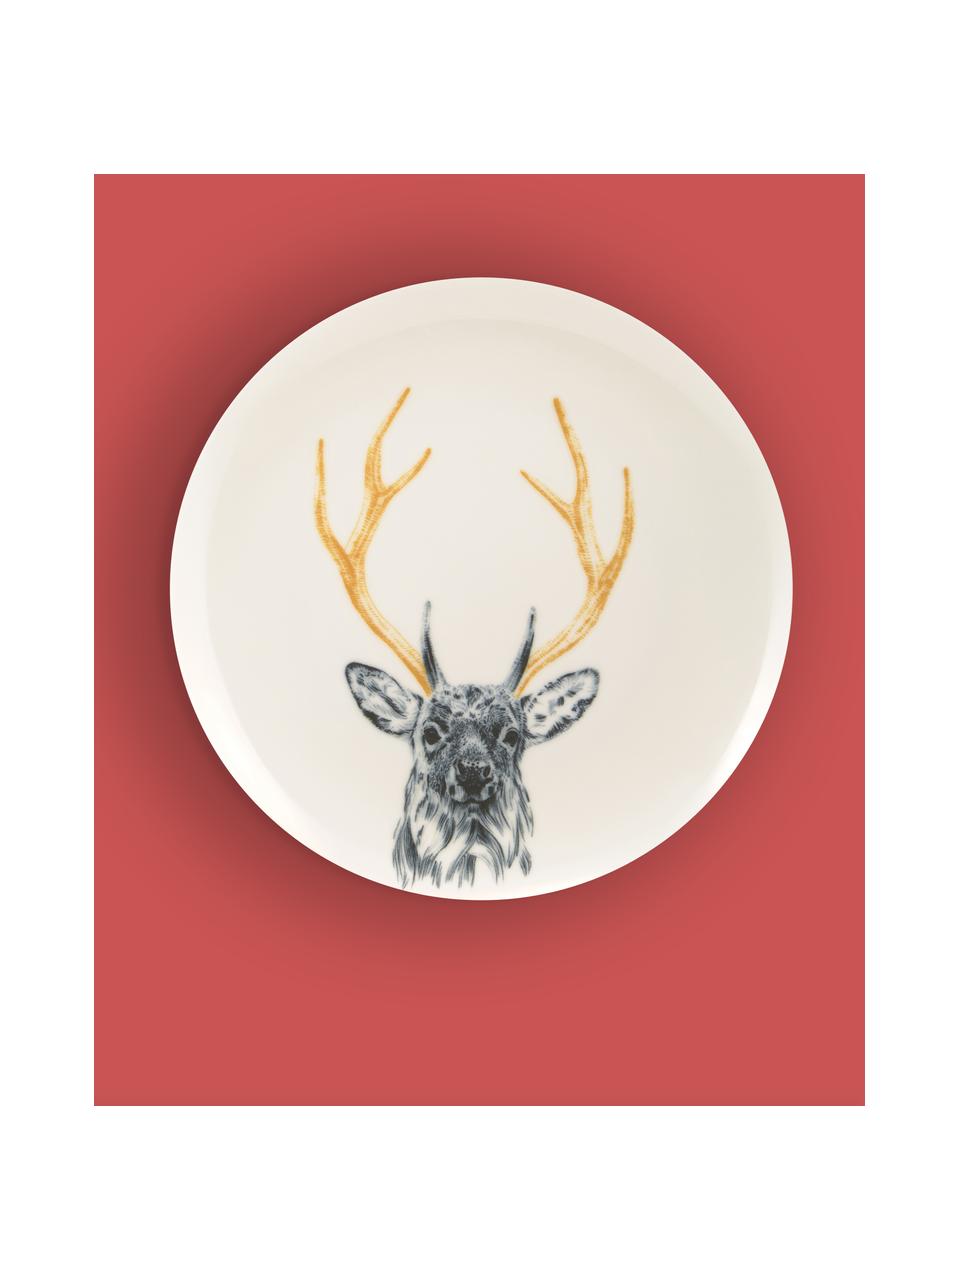 Assiette plate porcelaine faite main Safari Deer, Blanc